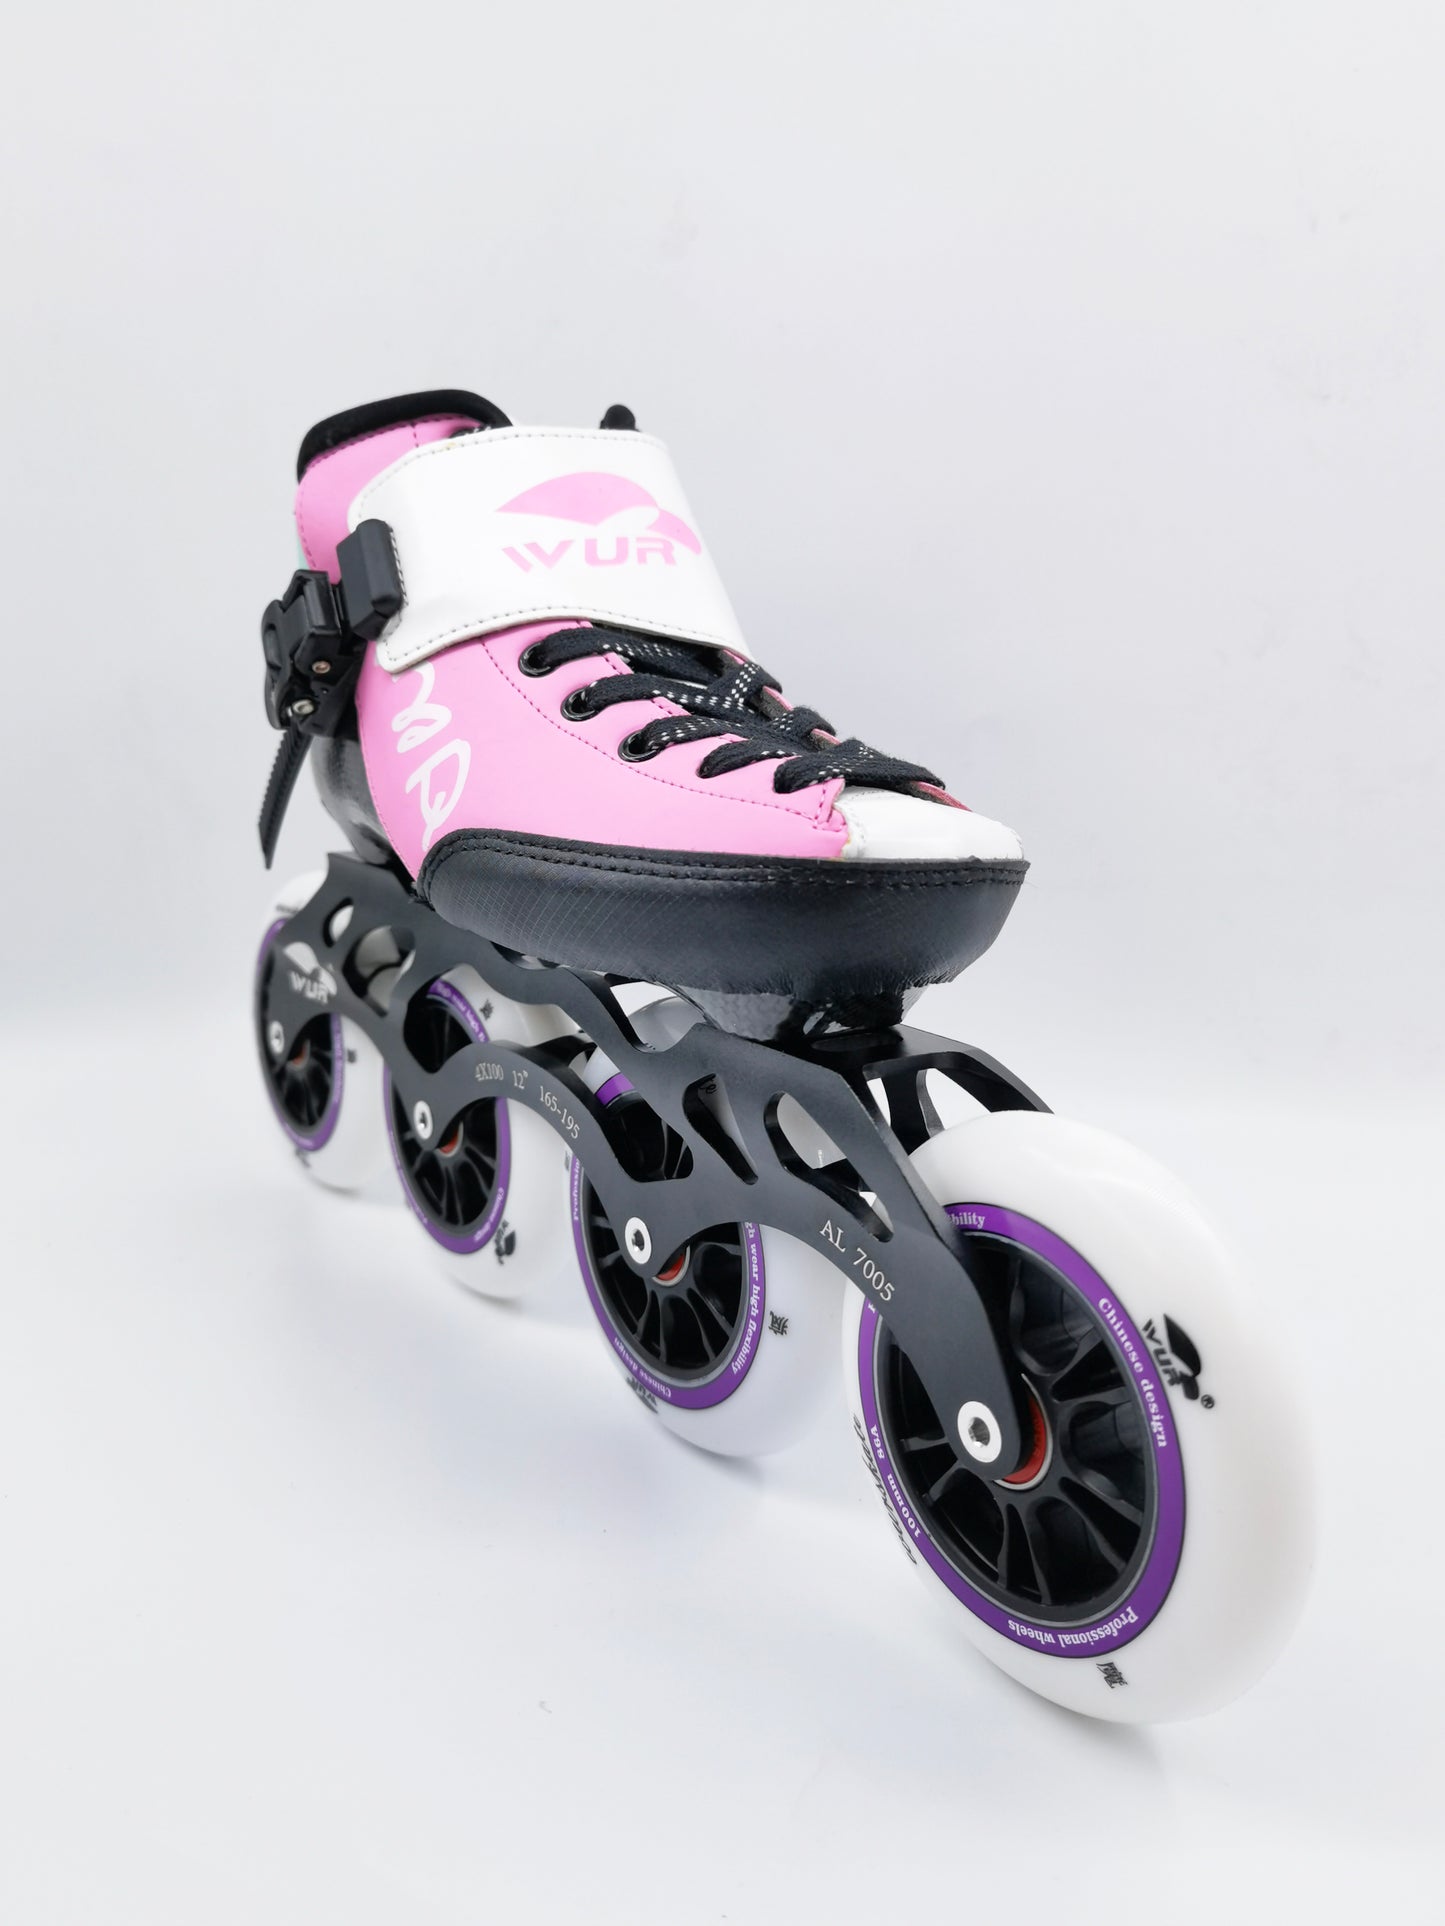 WUR skates inline speed skates carbon fiber pink CX02 4*110mm in stock